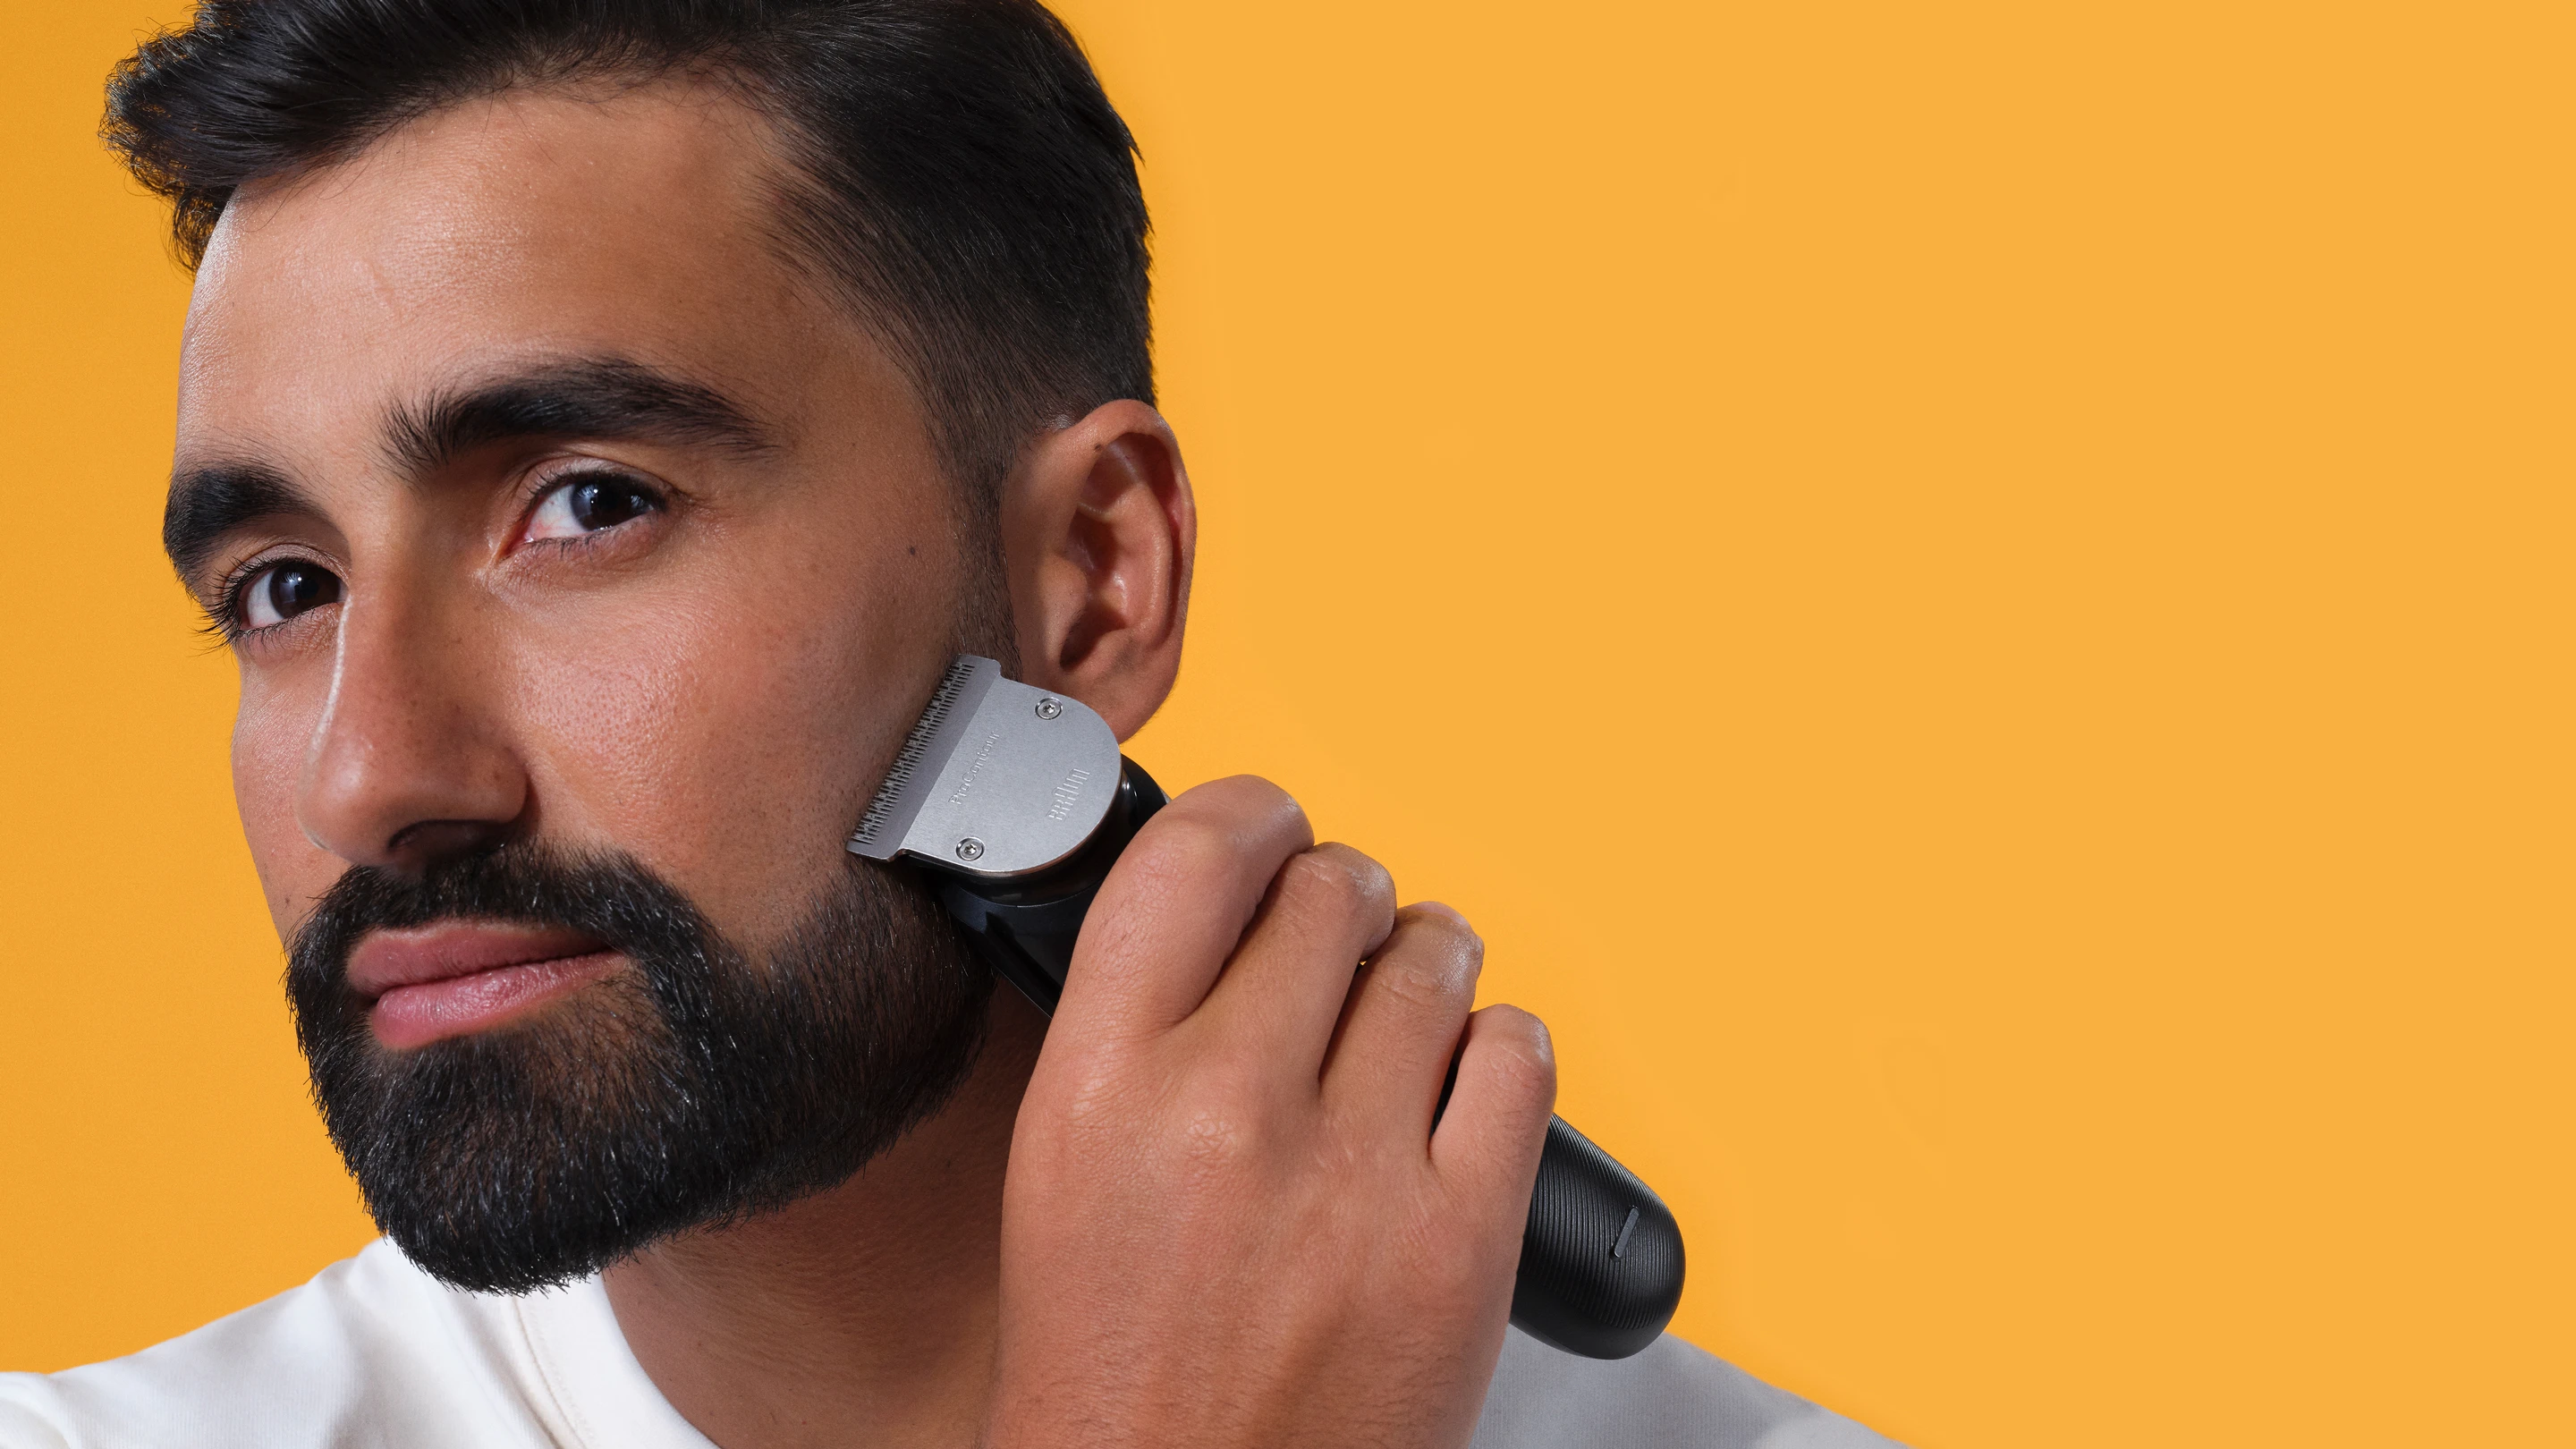 Man using Beard trimmer on beard